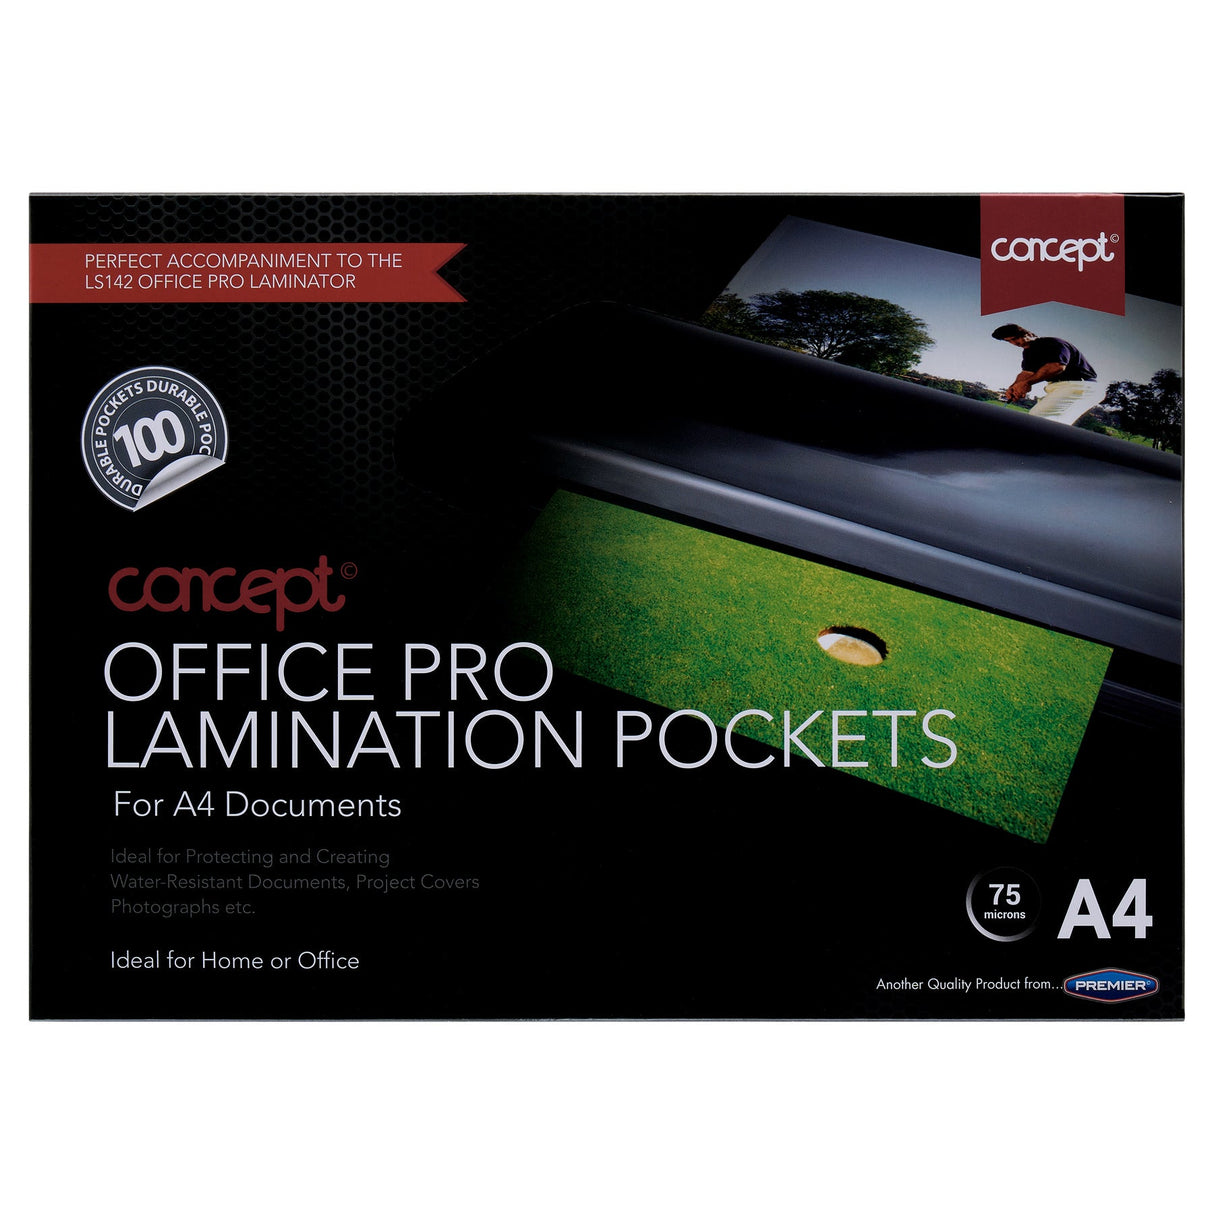 Concept A4 Office Pro Laminating Pouches - Pack of 100-Laminators & Pouches-Concept|StationeryShop.co.uk